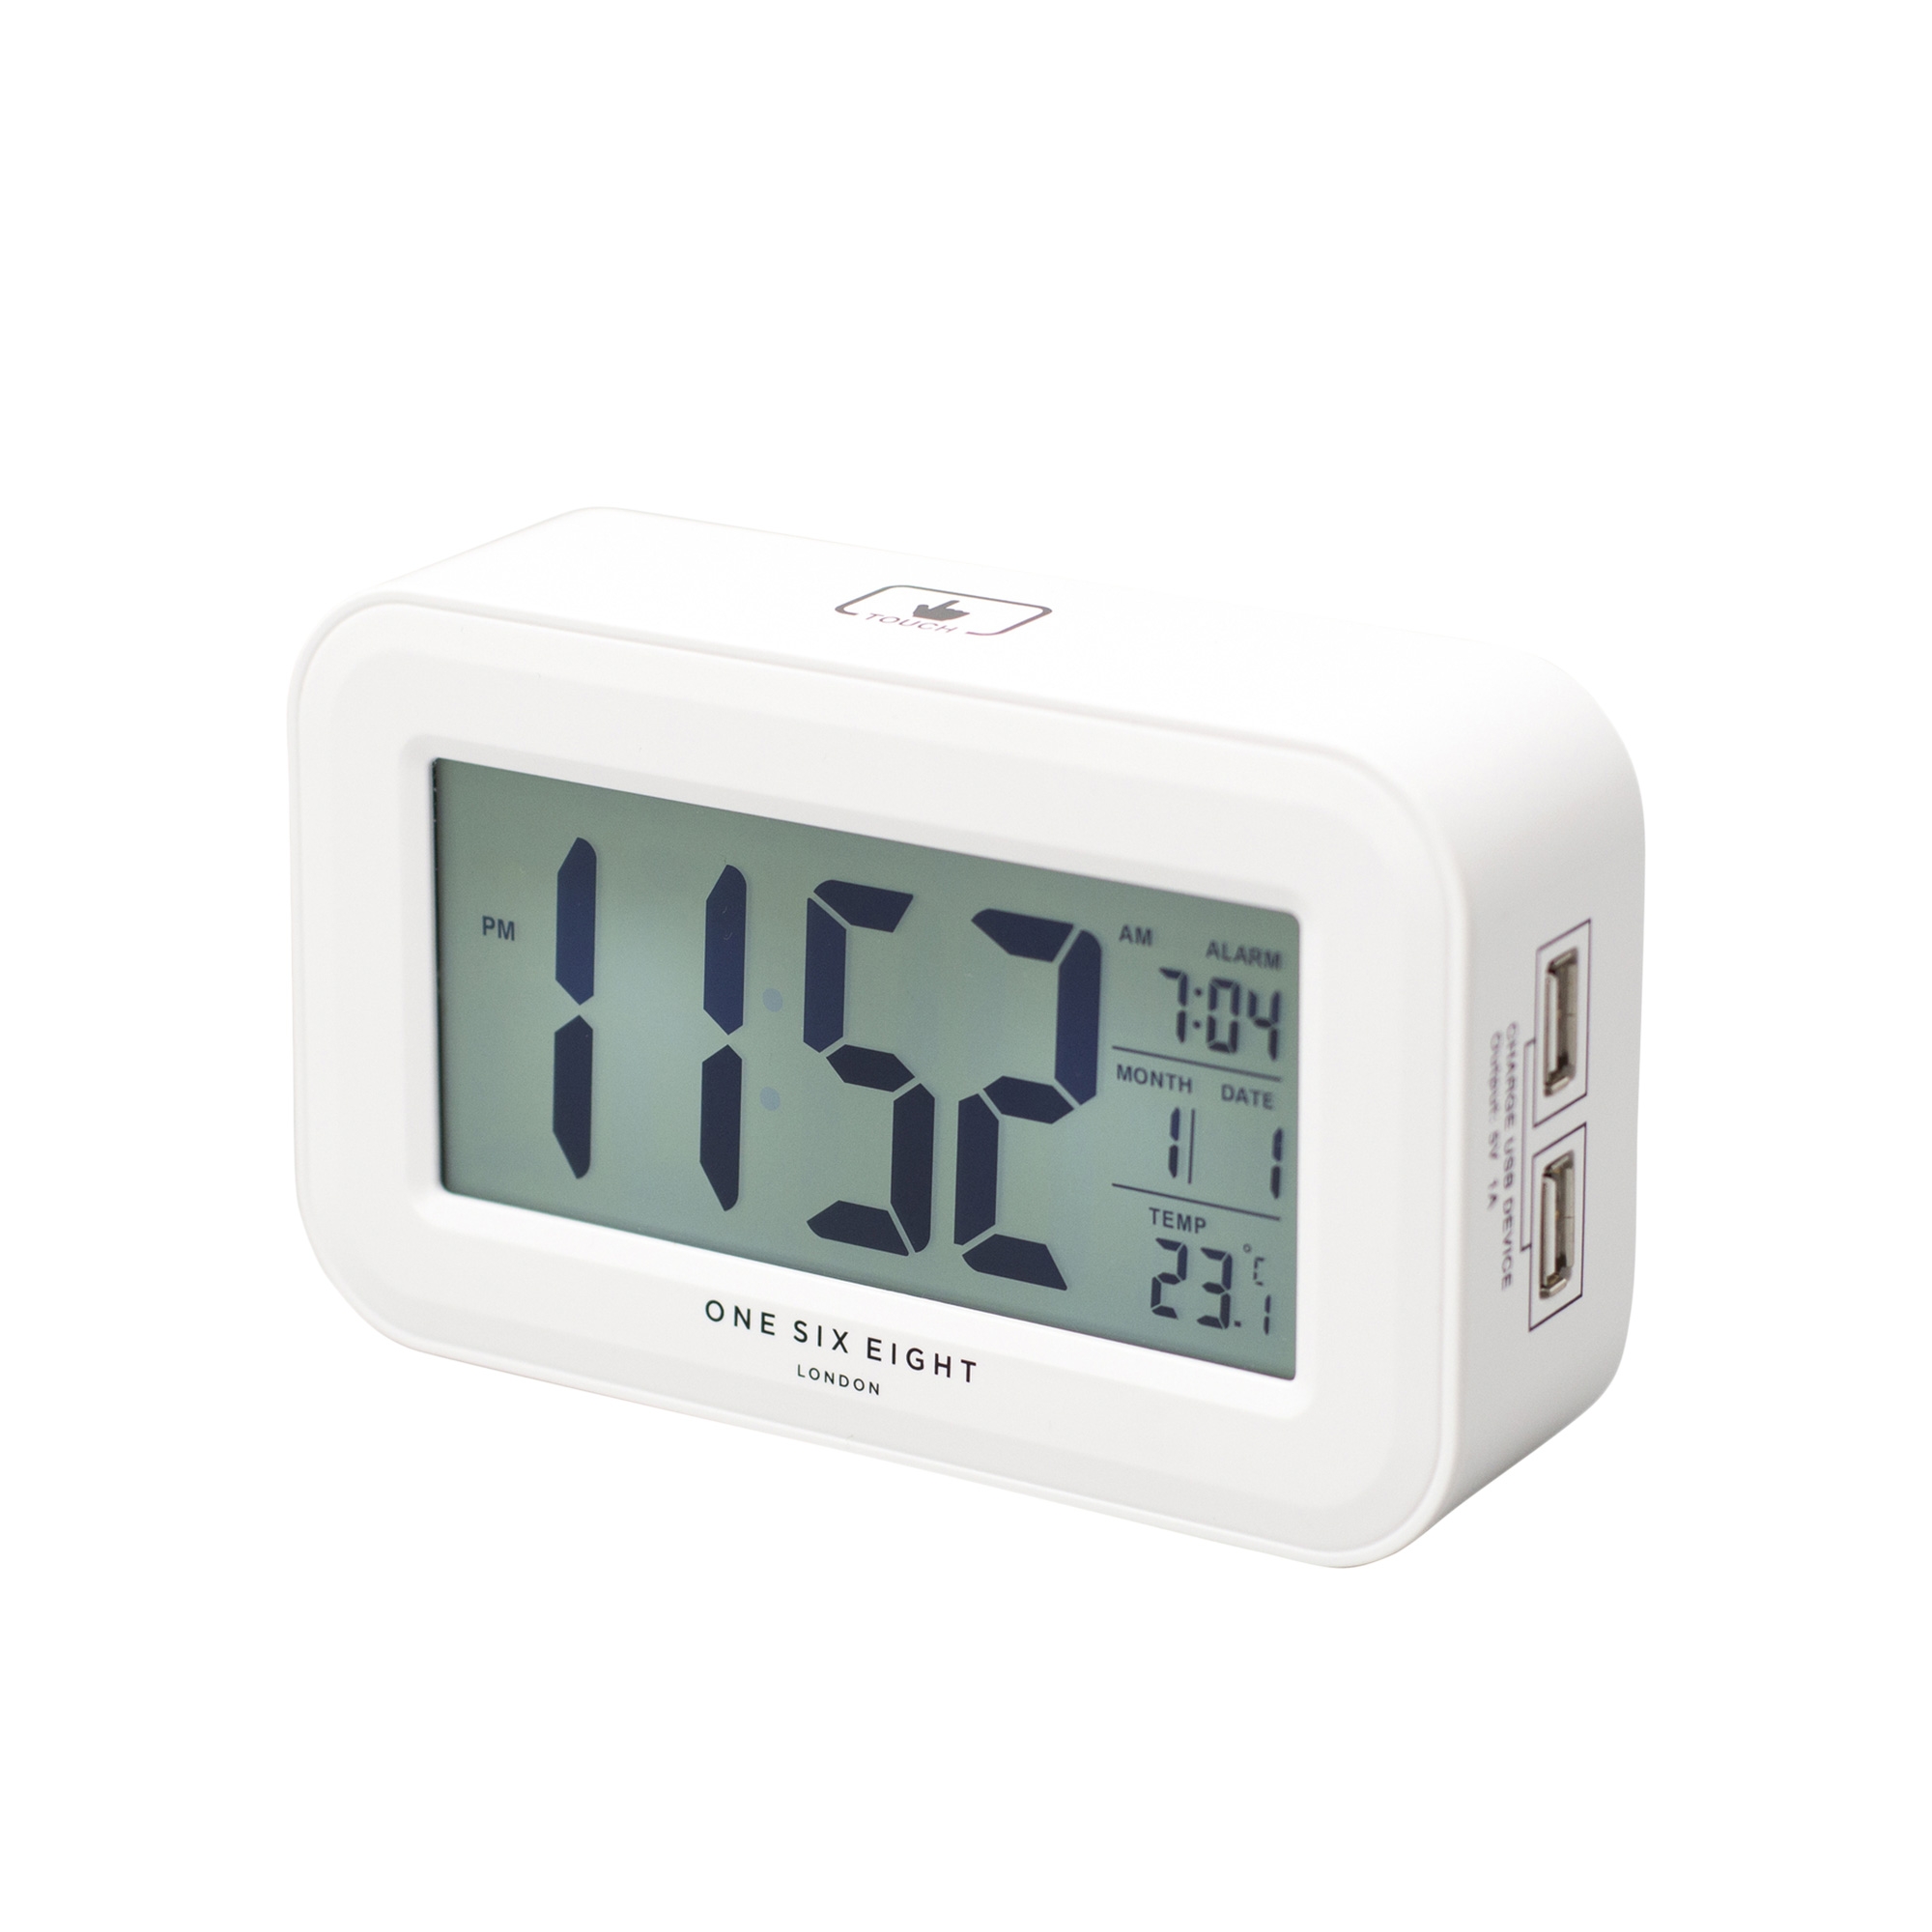 One Six Eight London Reilly Digital Alarm Clock White Image 1